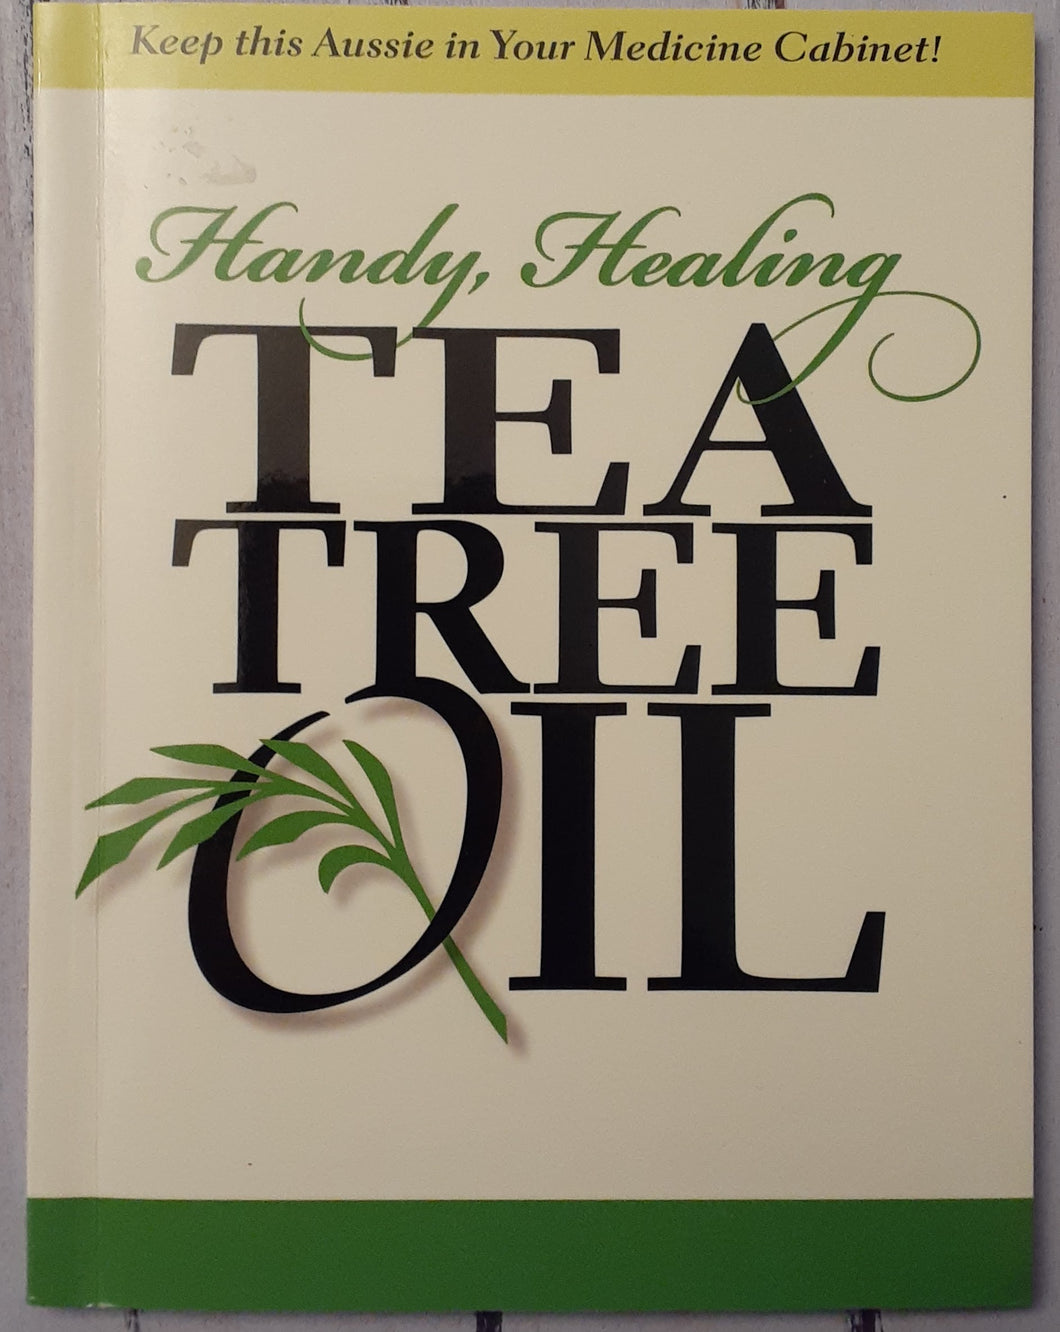 Handy, Healing Tea Tree Oil